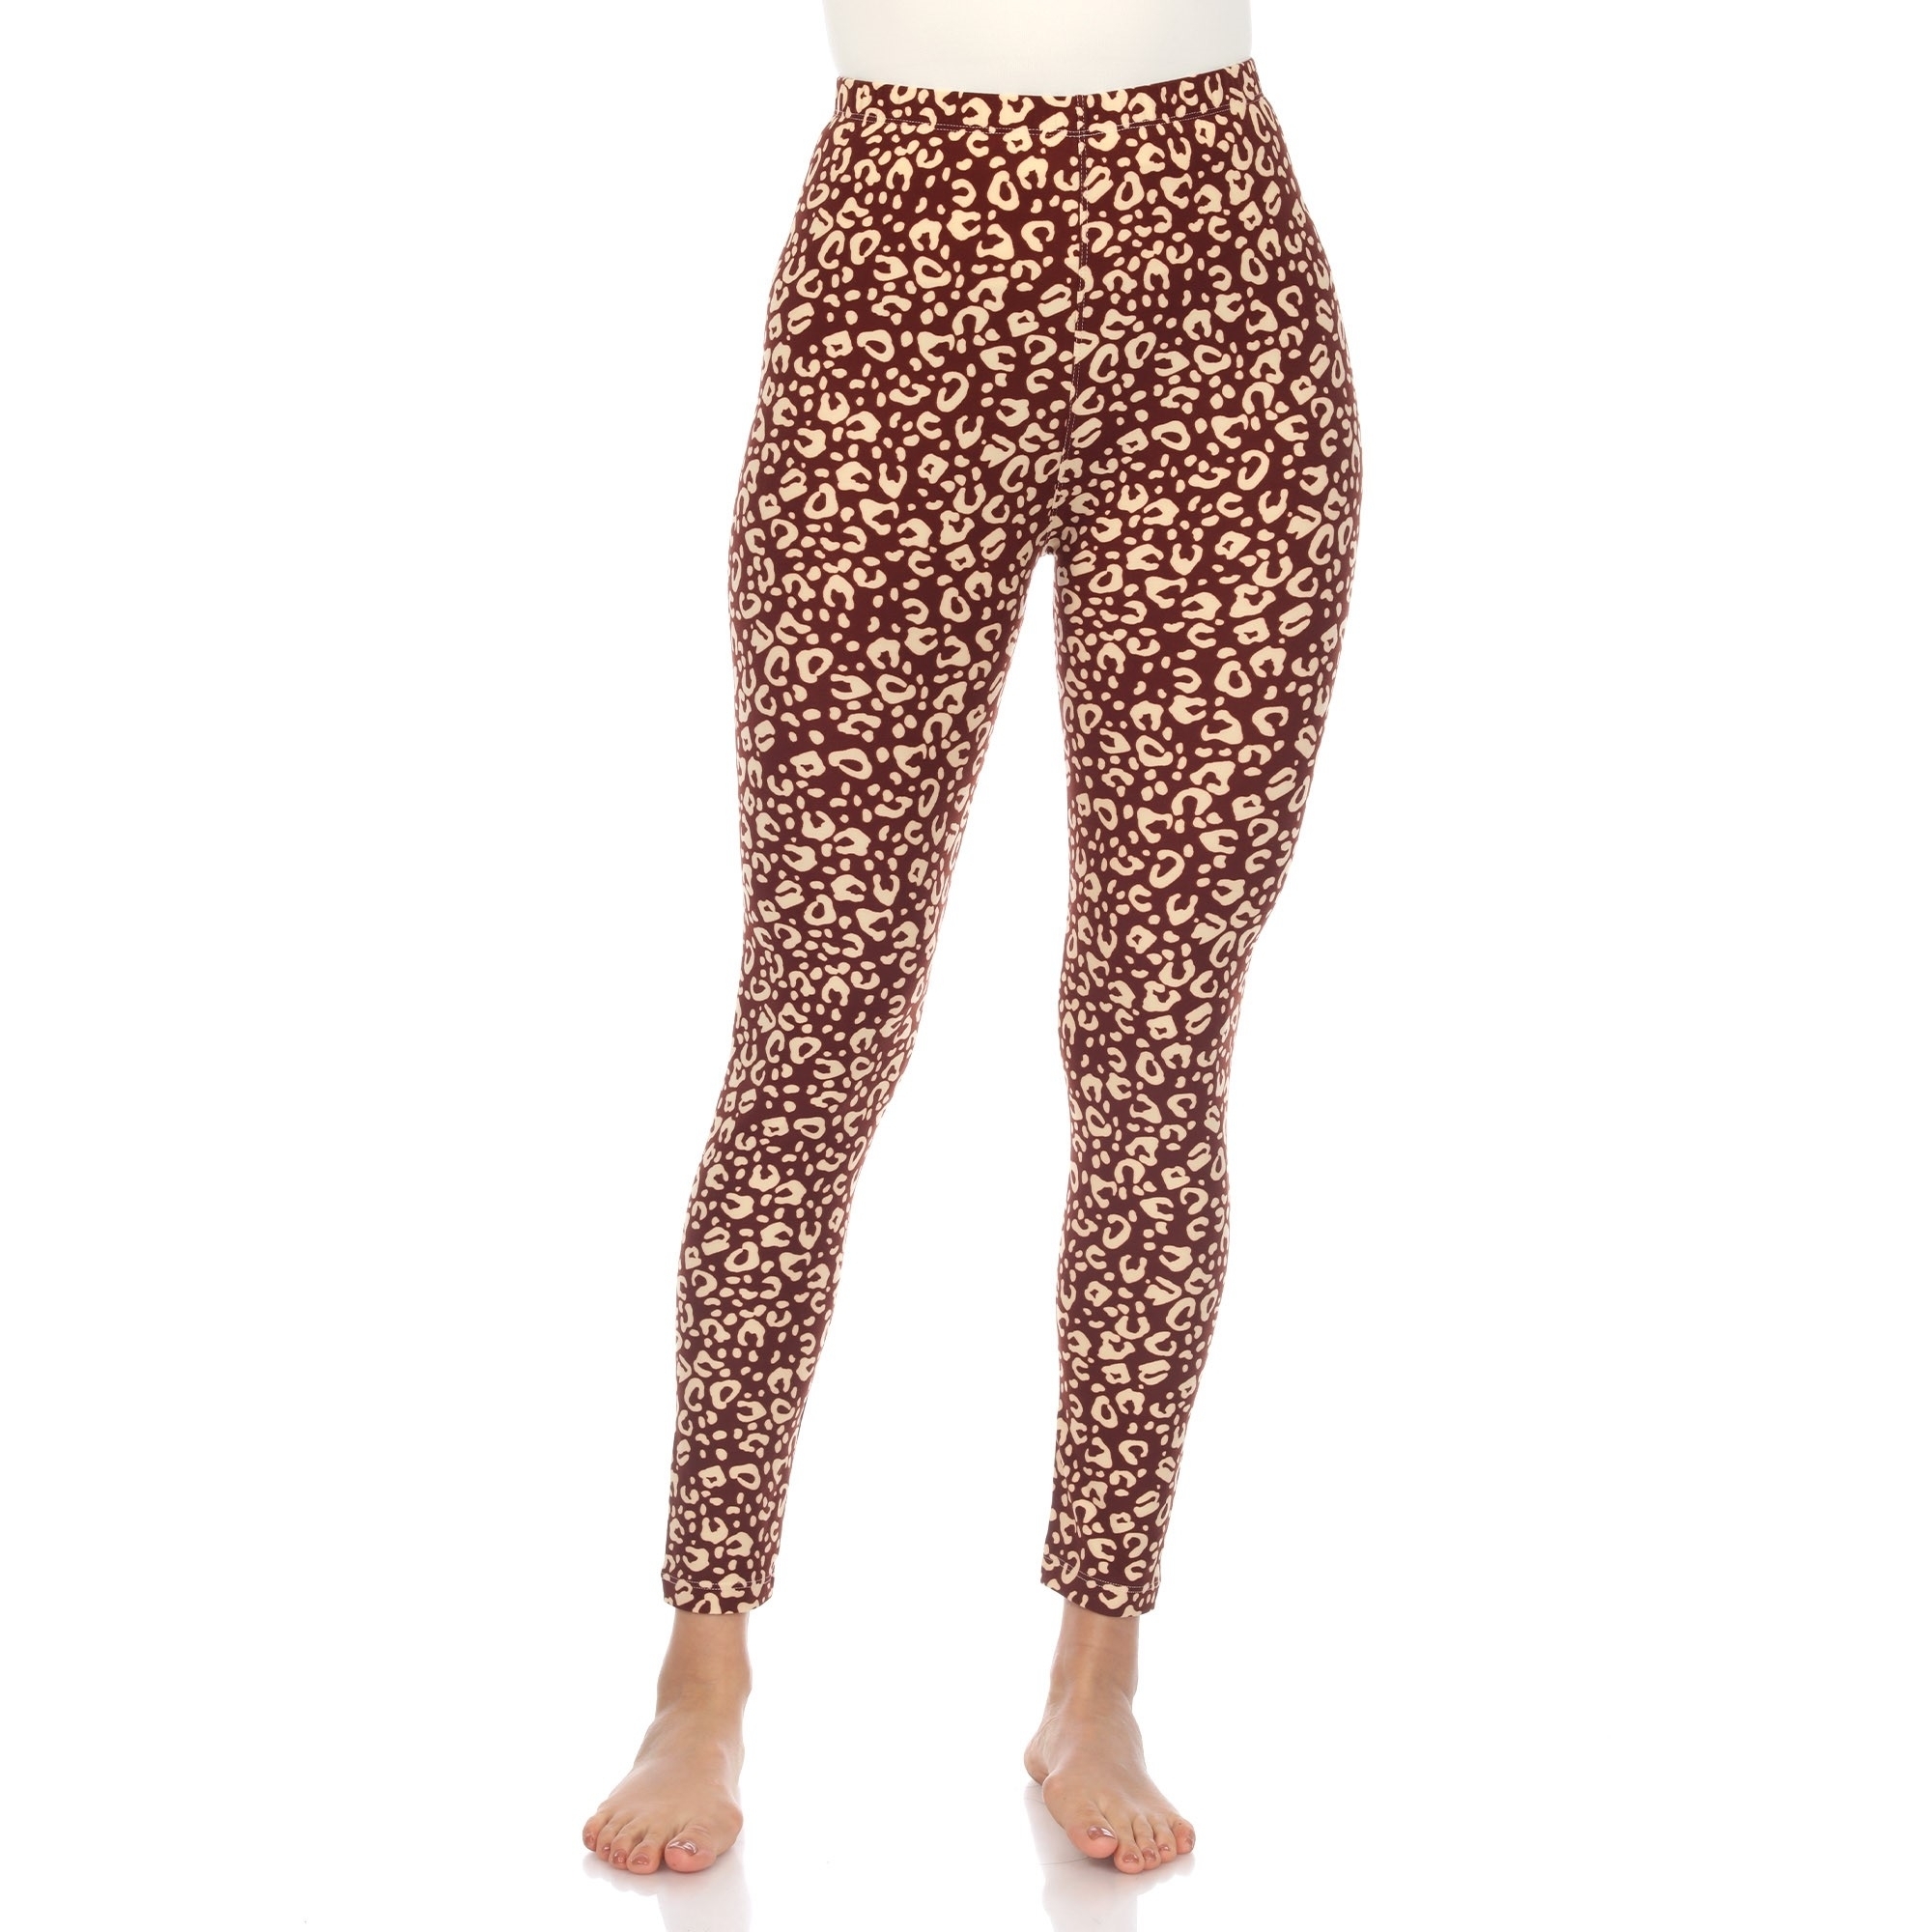 White Mark Women's Leopard Print Stretch Leggings - Brown, One Size